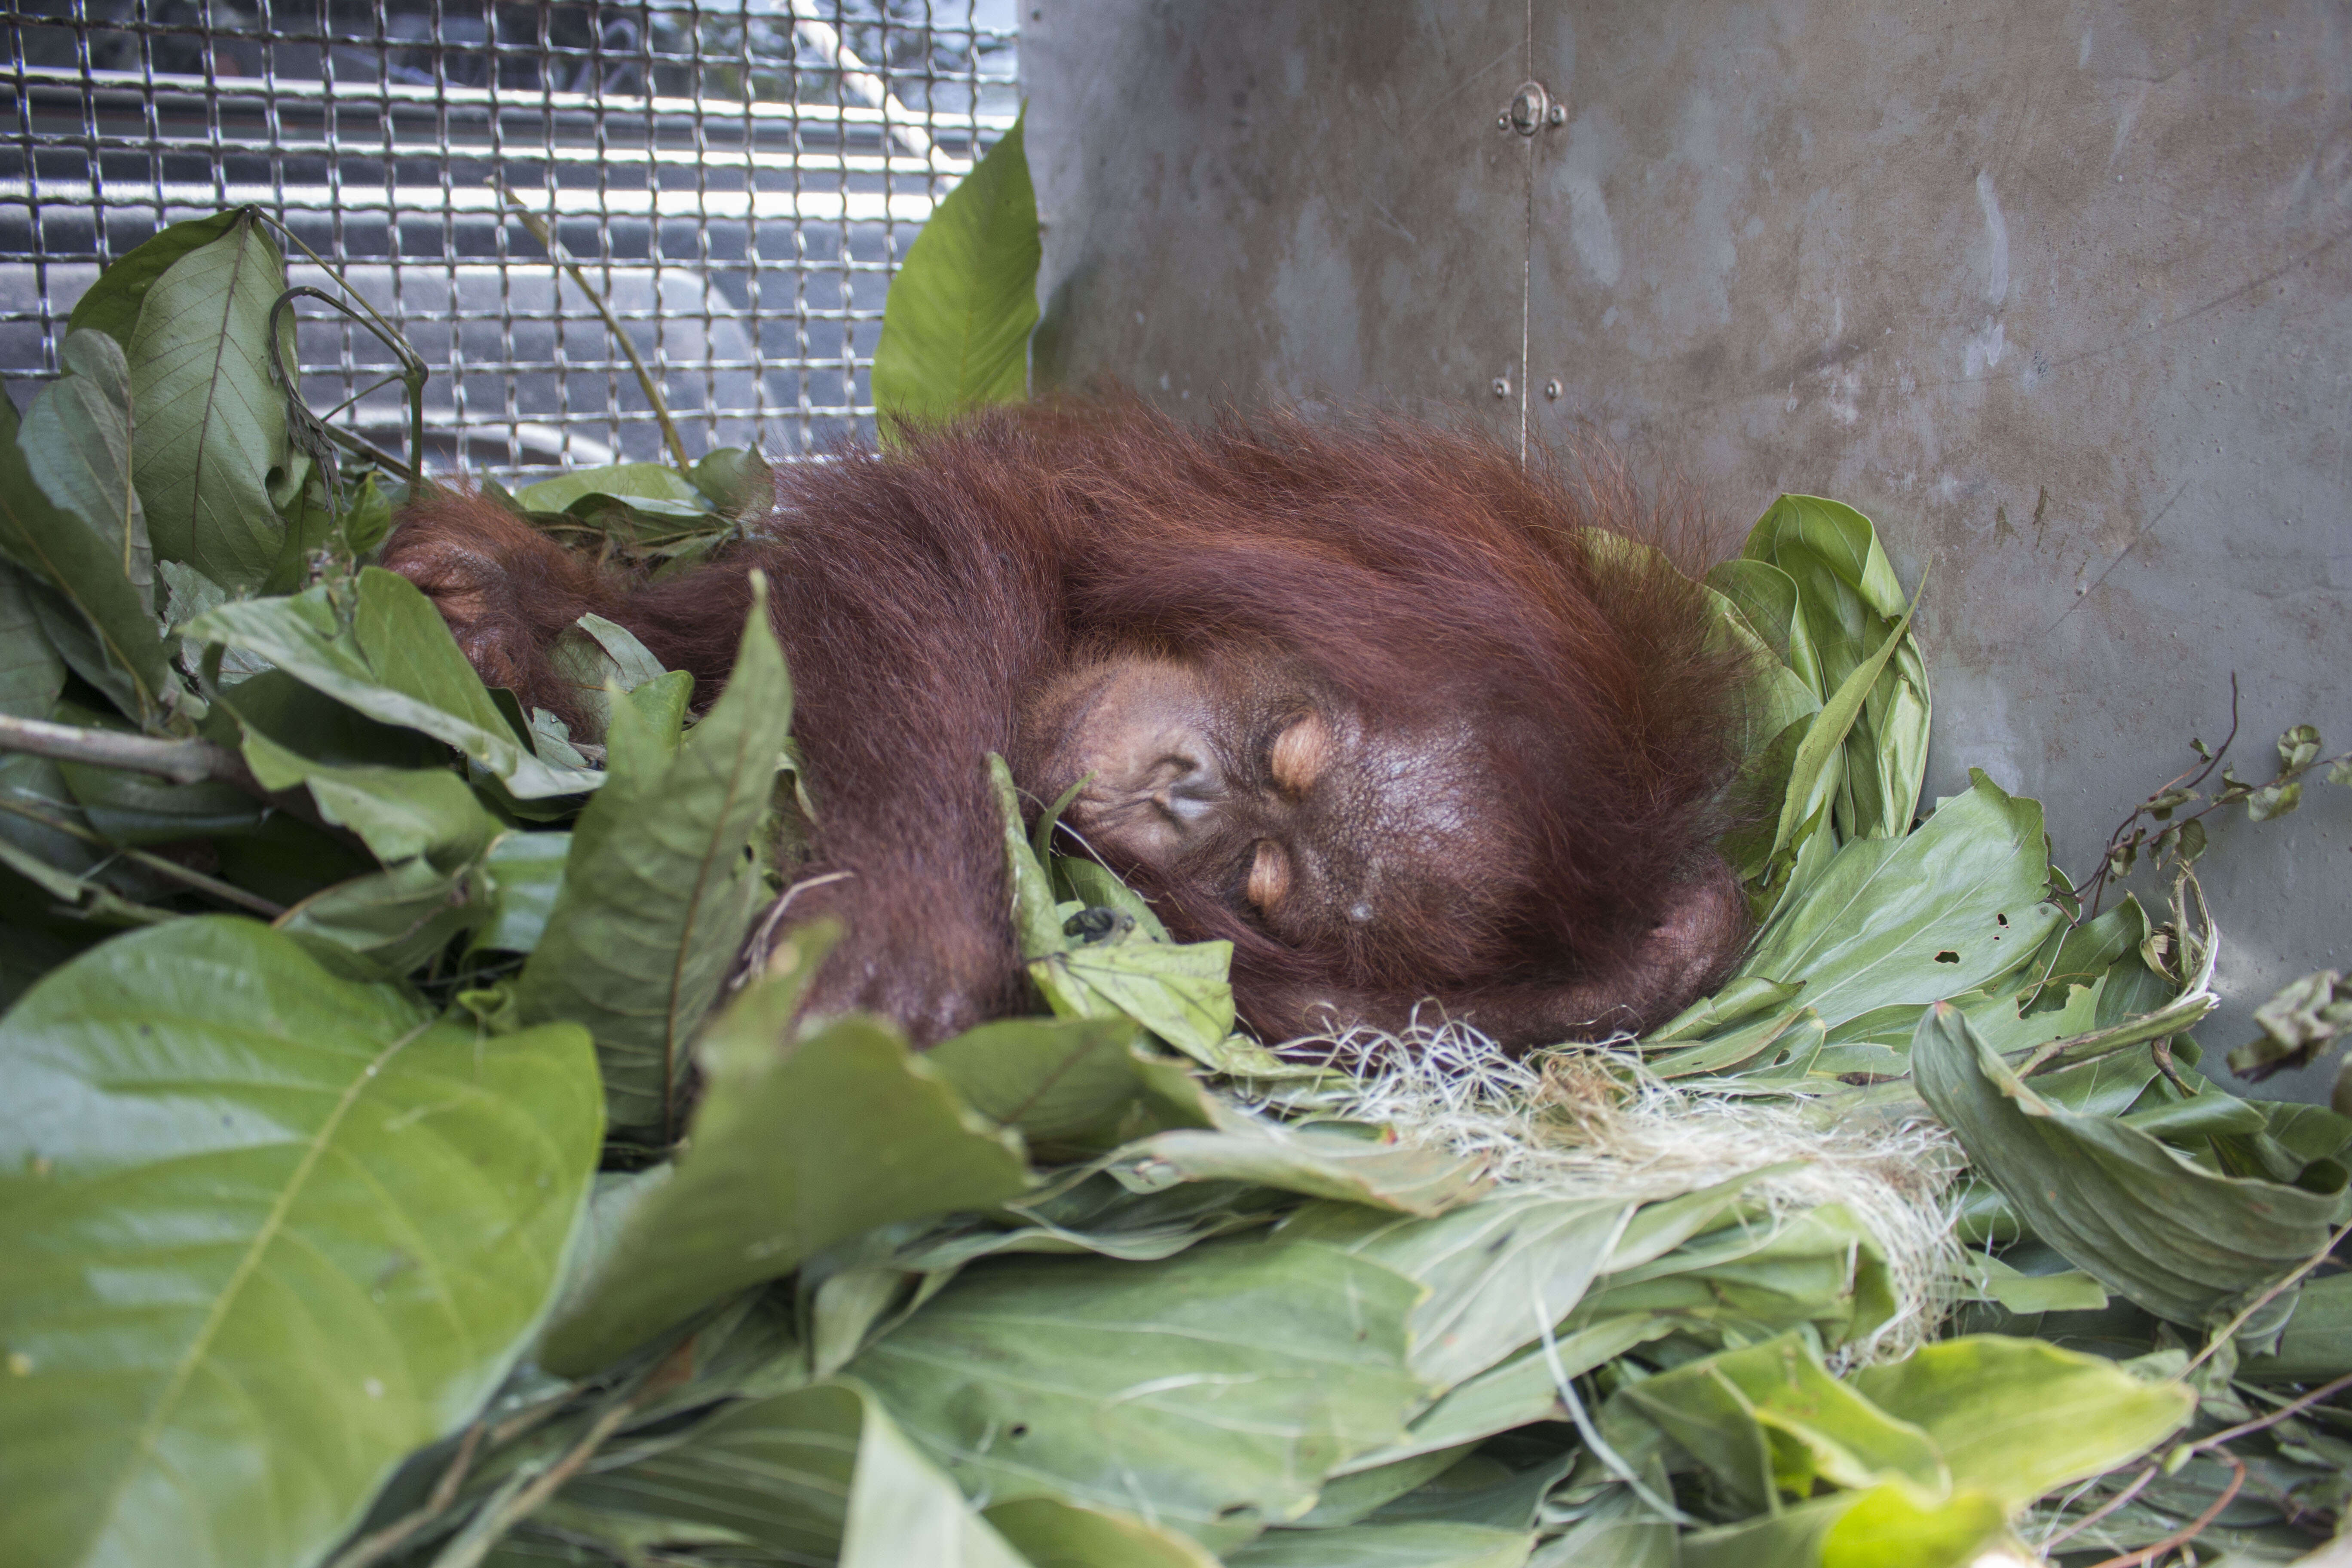 Rescued orangutan sleeping in transport kennel